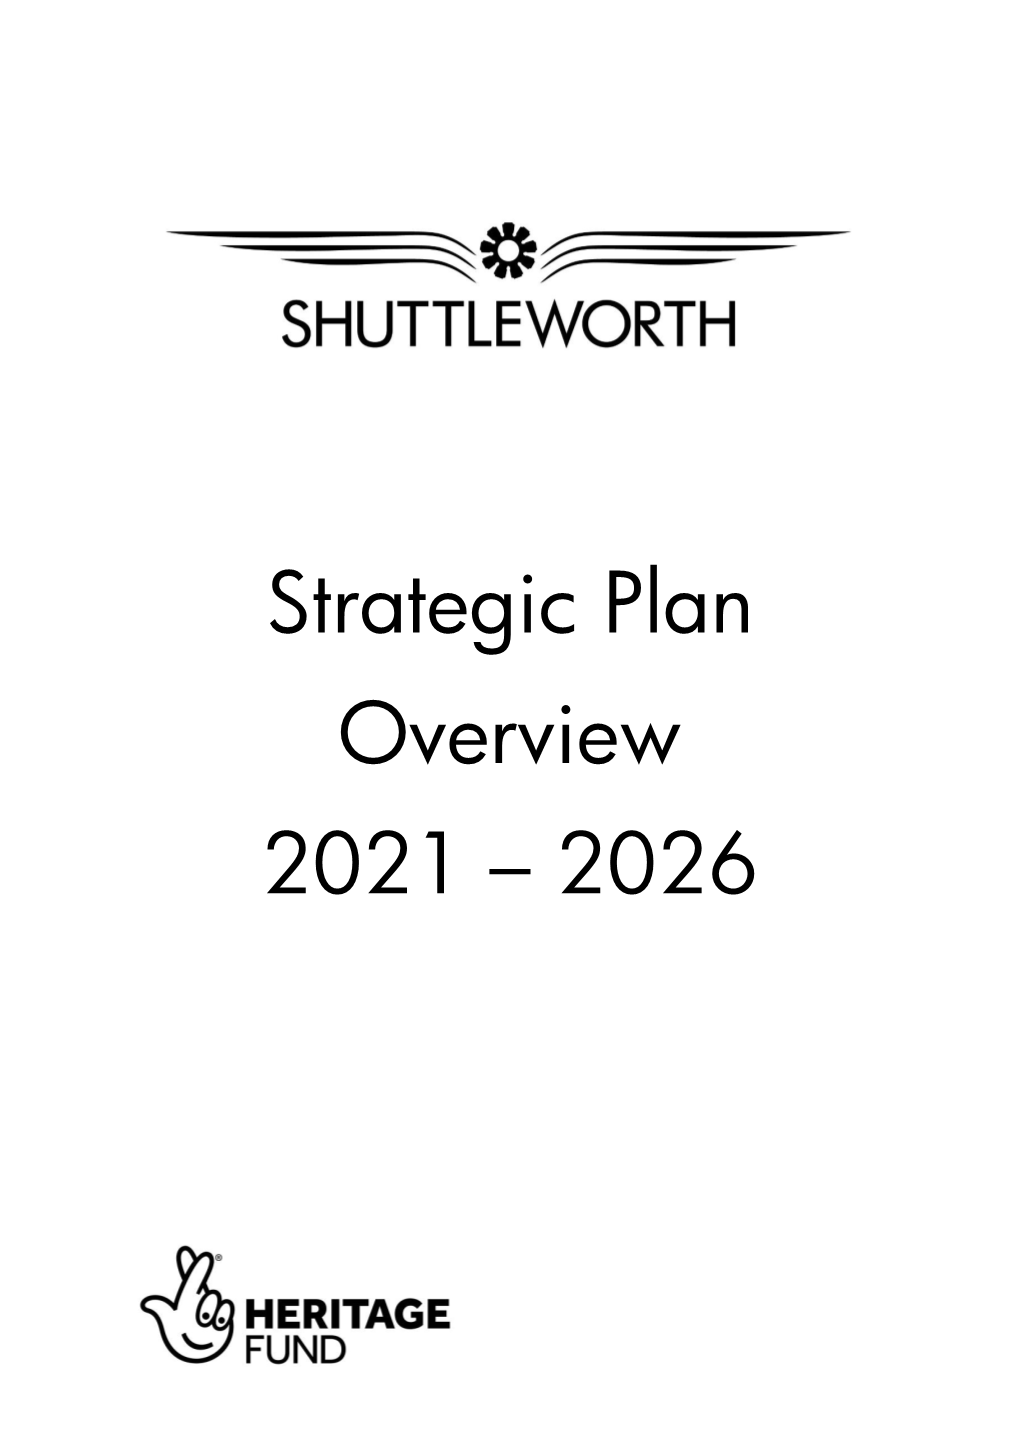 Shuttleworth Trust Strategic Plan 2021-2026